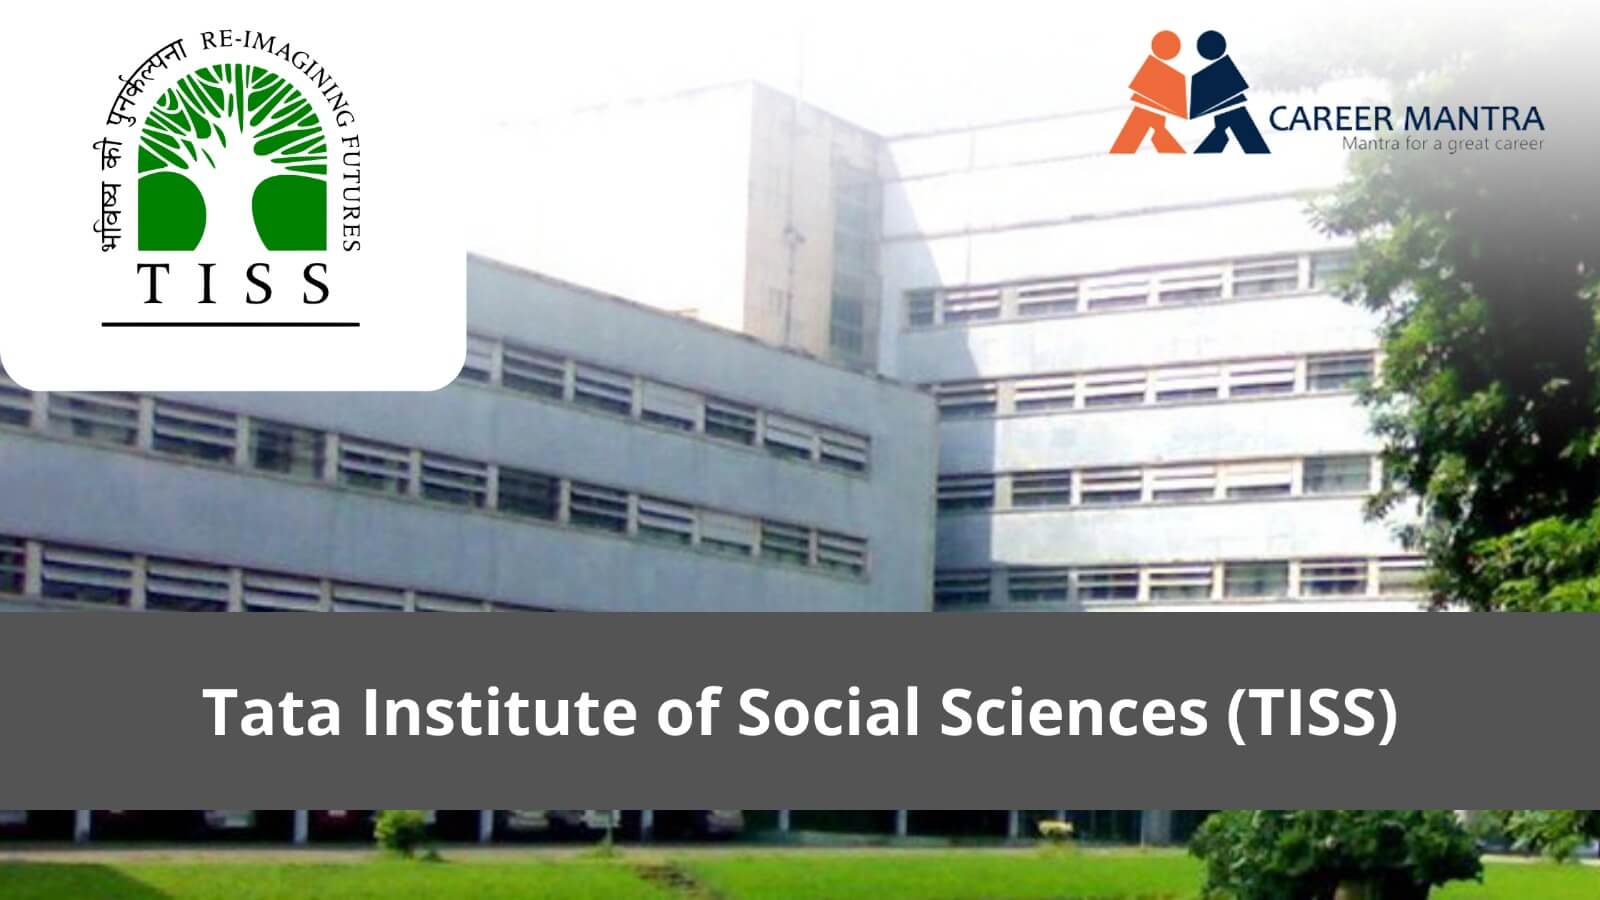 https://www.careermantra.net/blog/tata-institute-of-social-sciences-tiss/